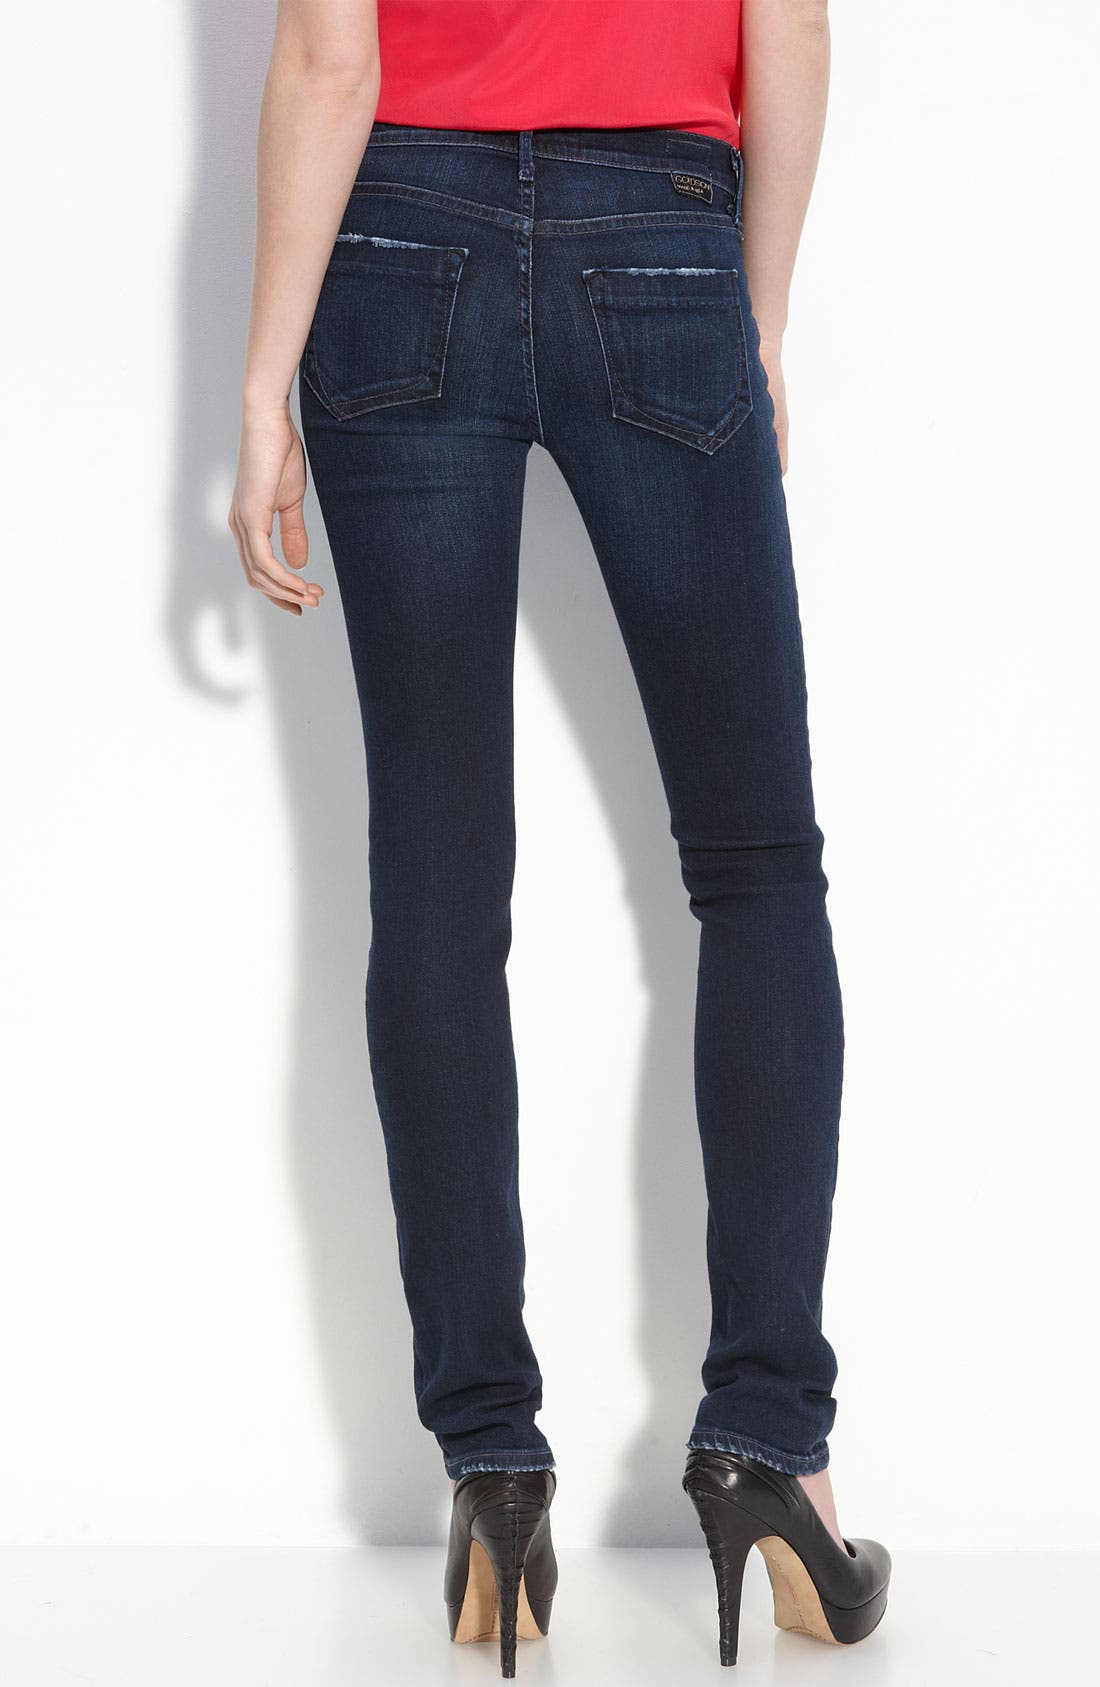 paige jeans price